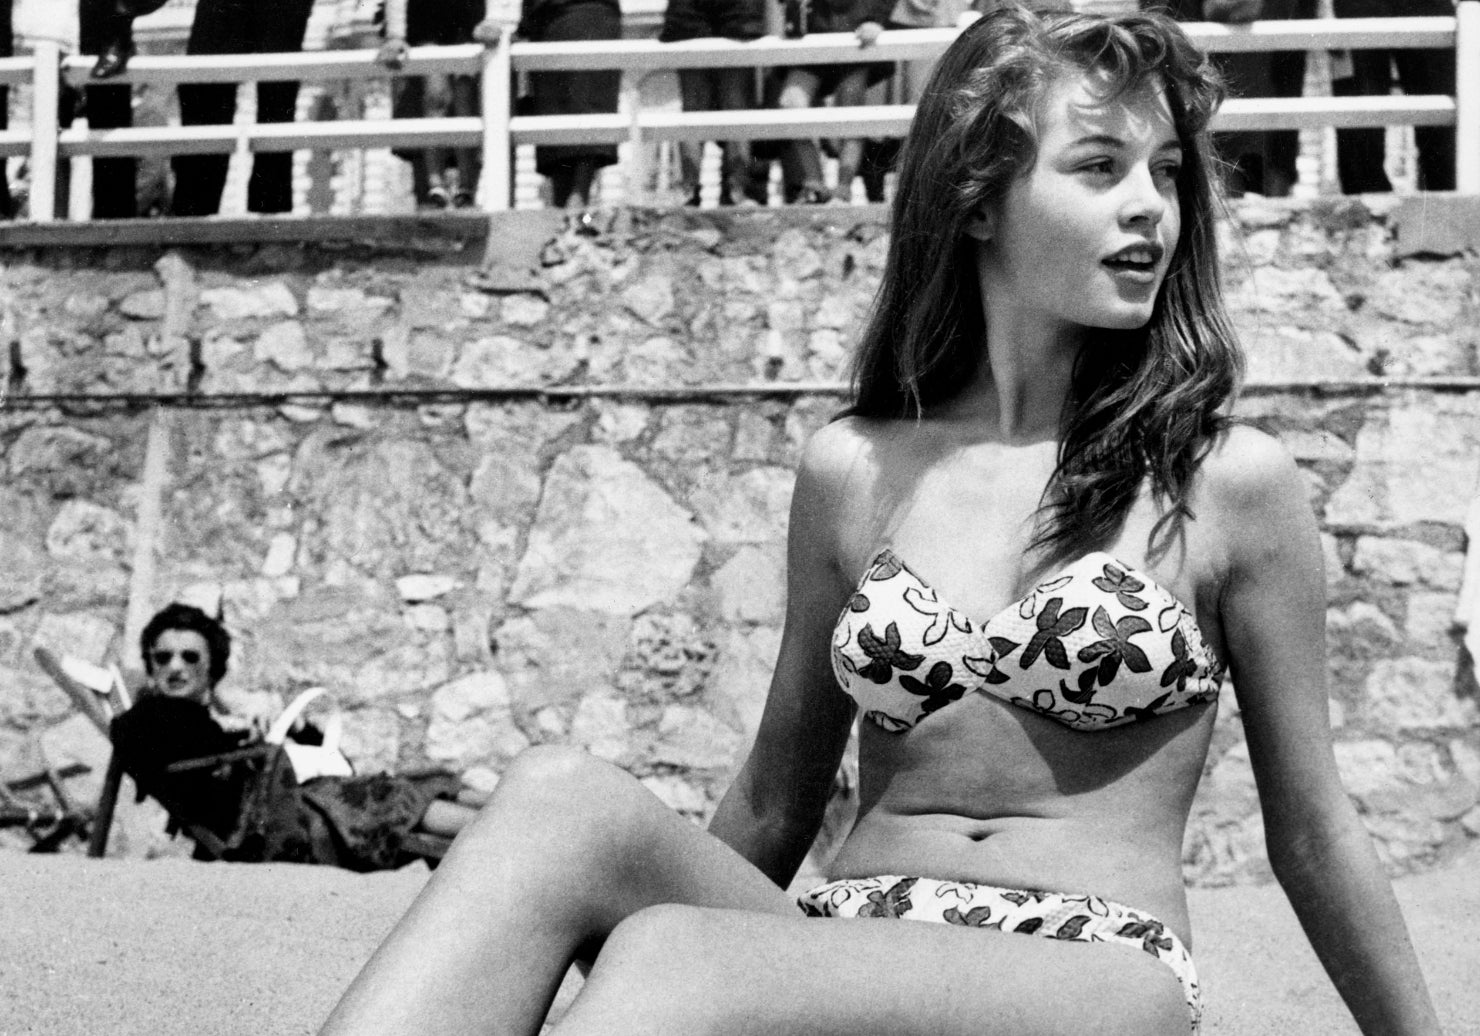 Brigitte Bardot bikini style in the 70s